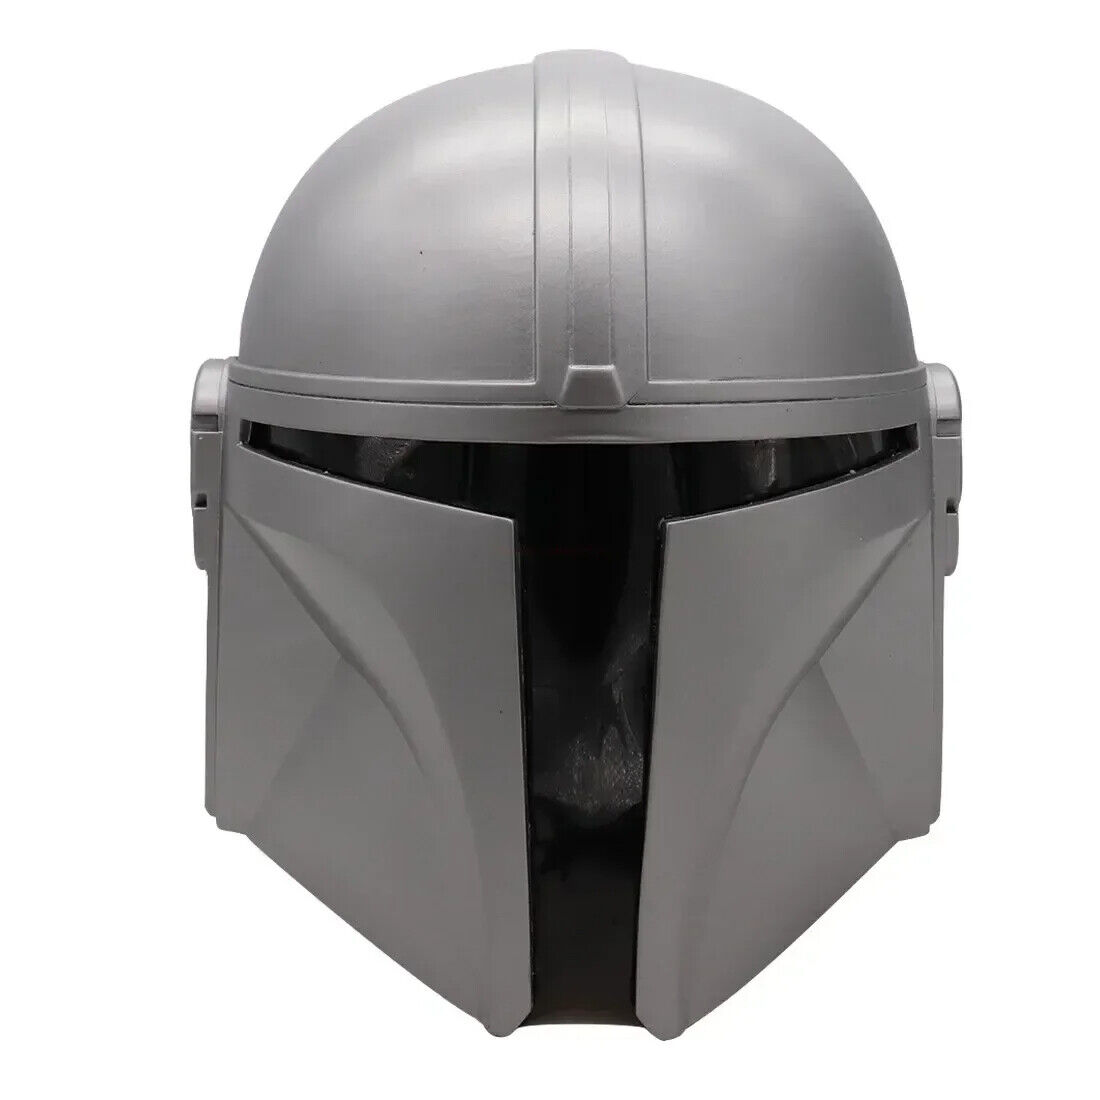 Star Wars PVC Helmet Replica for Cosplay